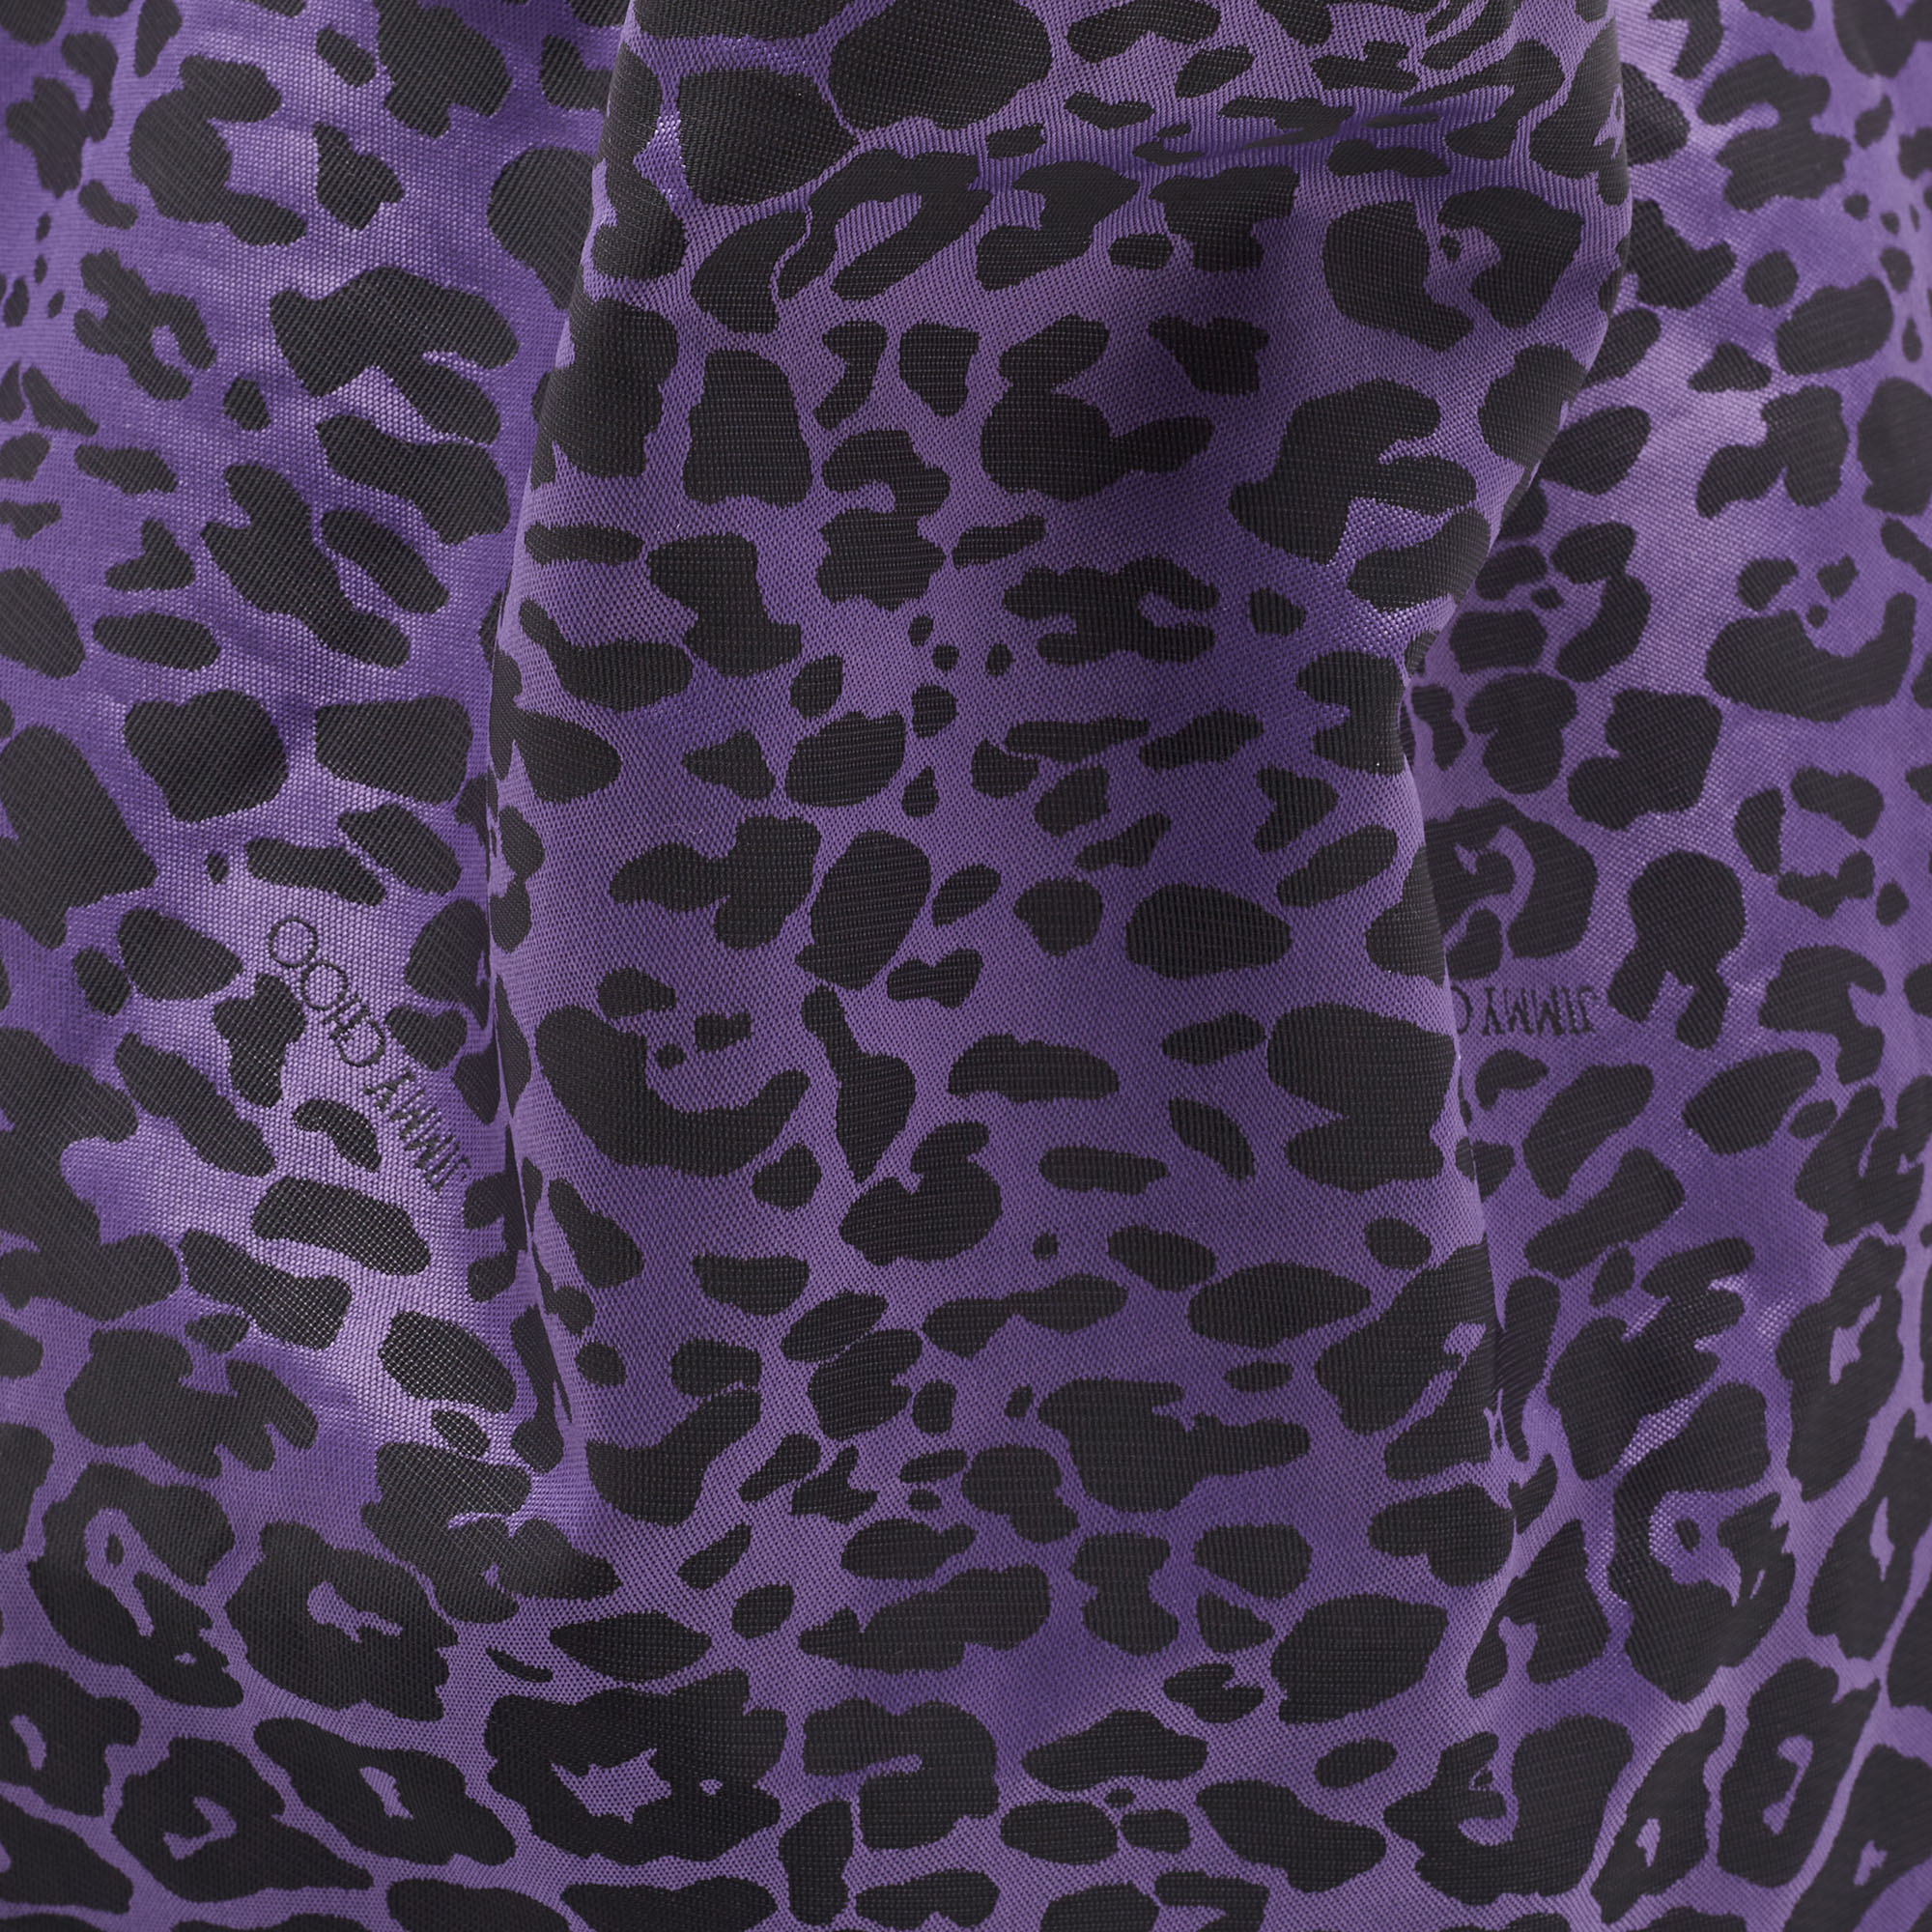 Jimmy Choo Purple/Black Leopard Print Fabric Zip Shopper Tote